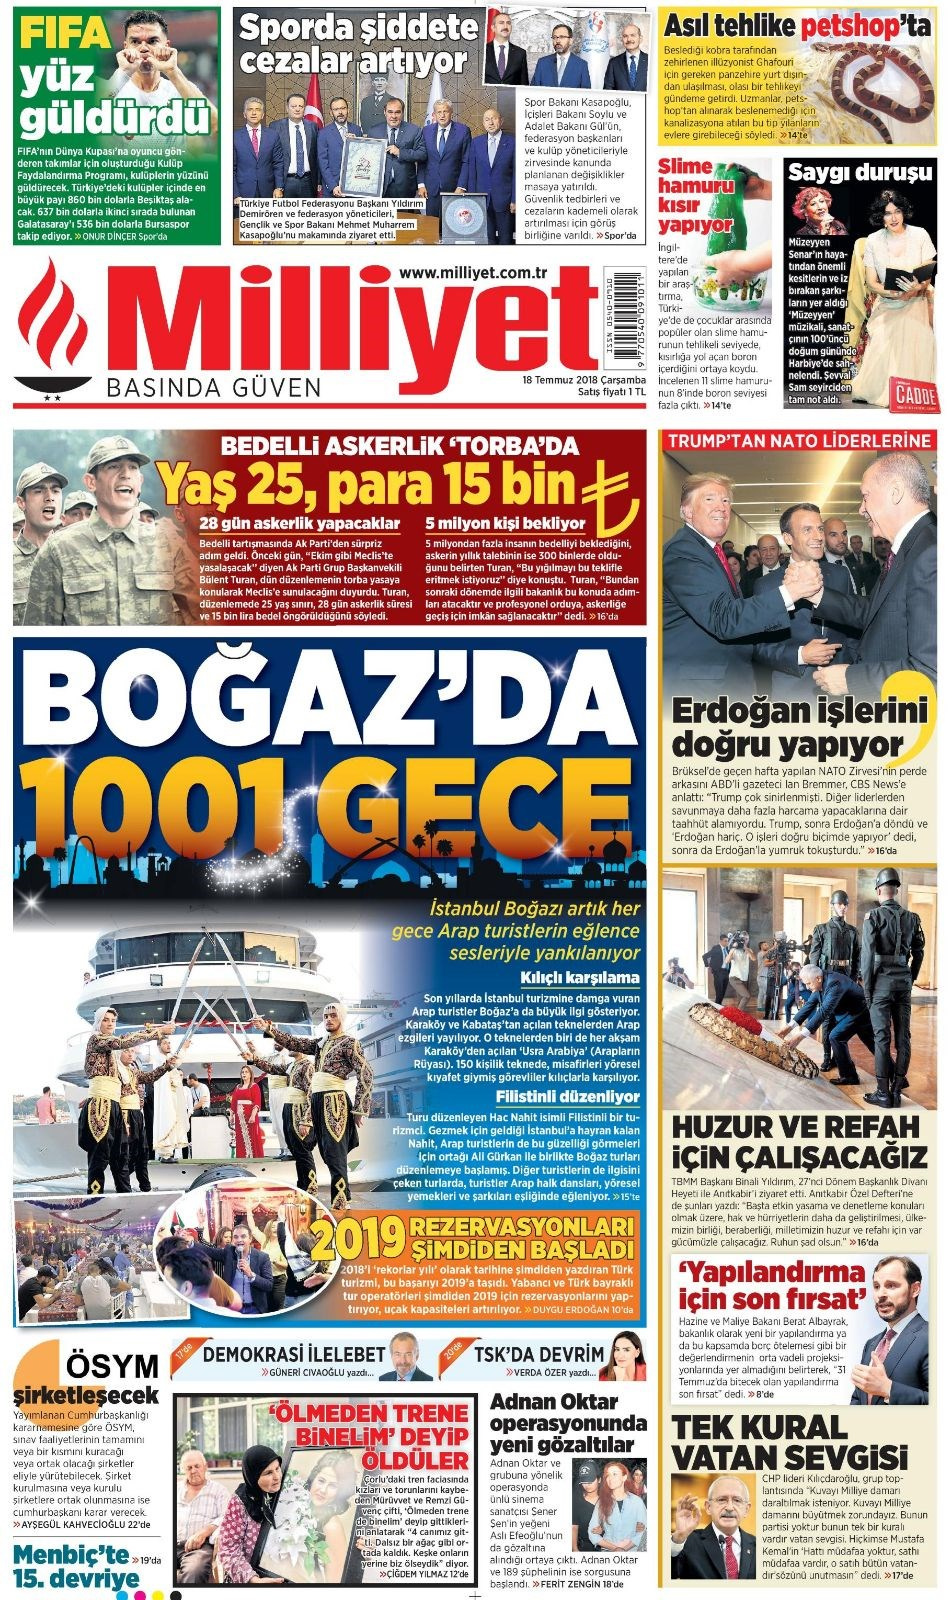 Gazete manşetleri 18 Temmuz 2018 Hürriyet - Posta - Sabah